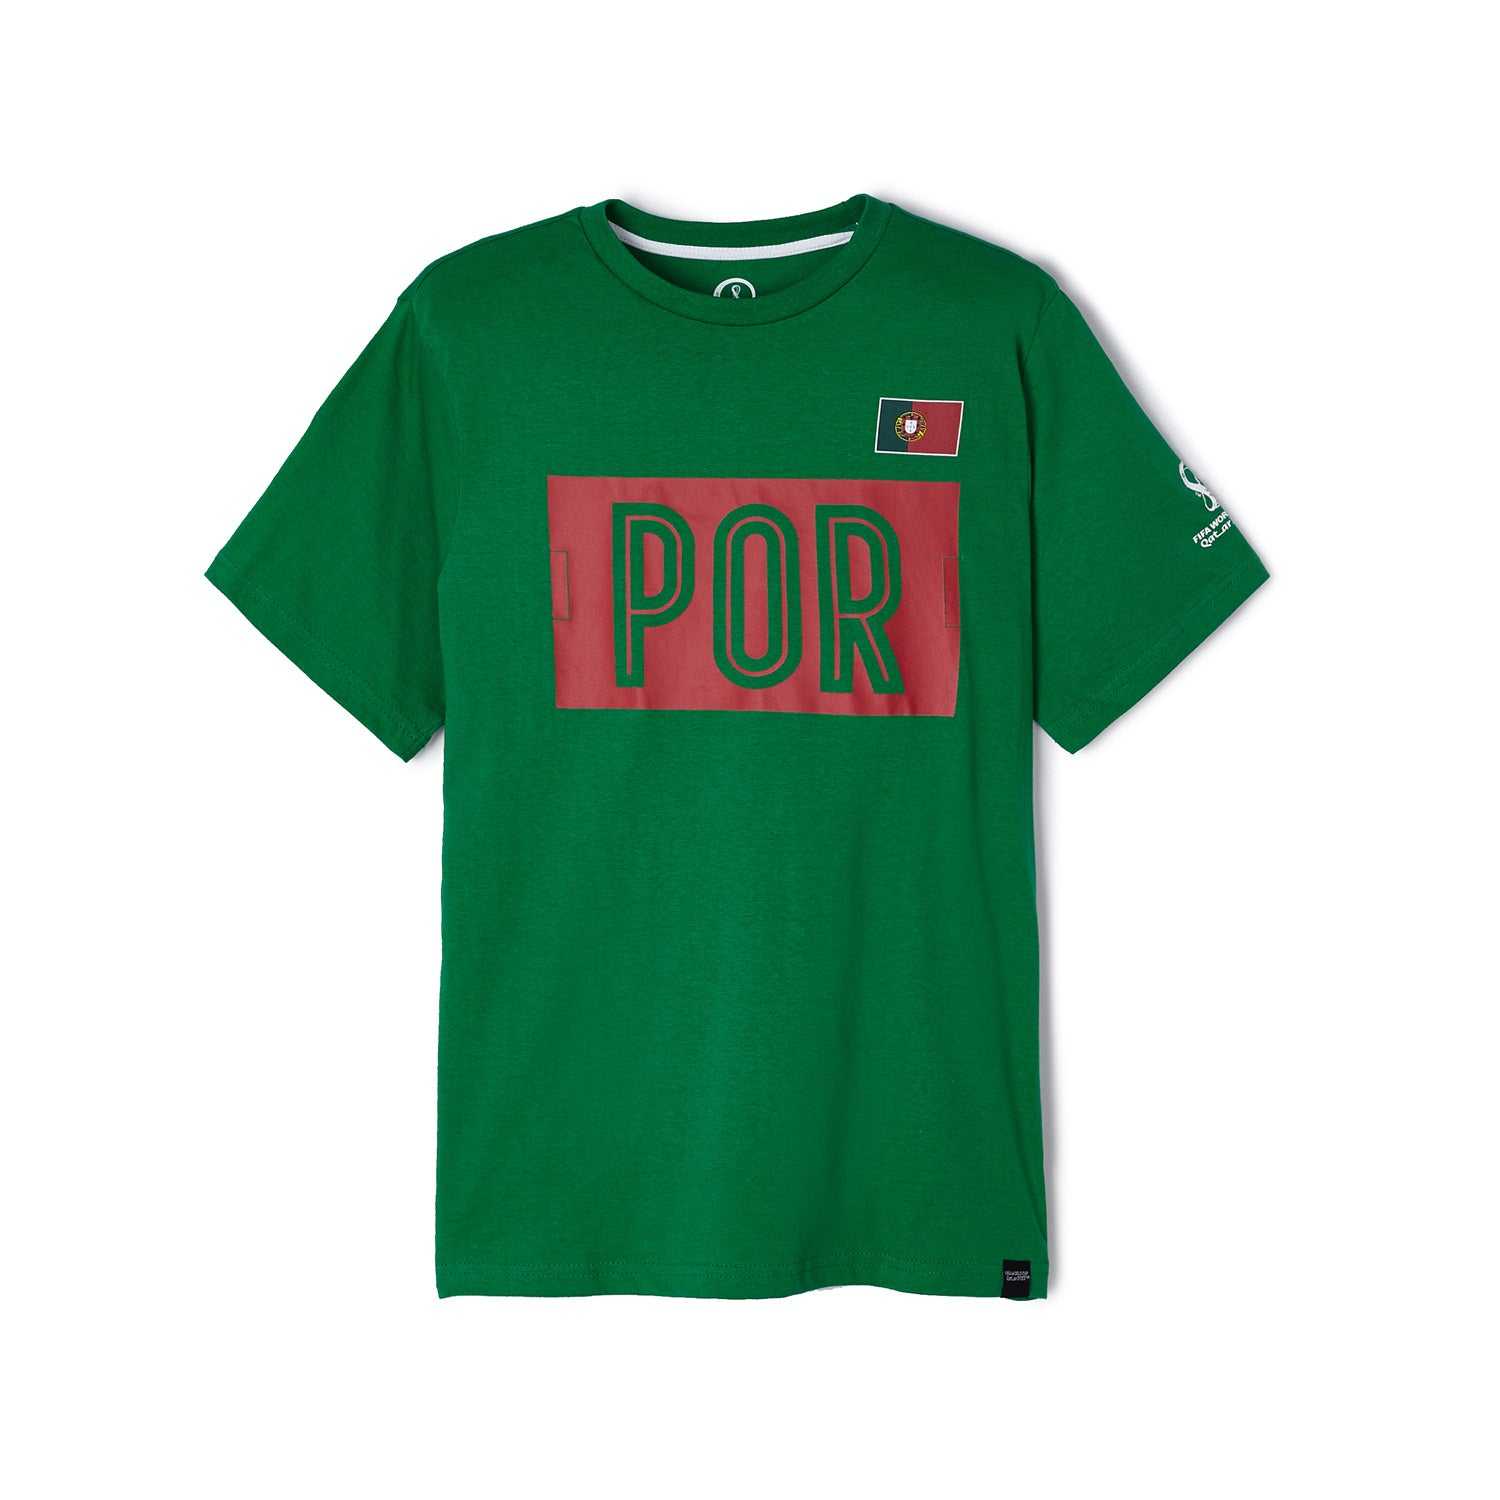 2022 World Cup Portugal Green T-Shirt - Mens